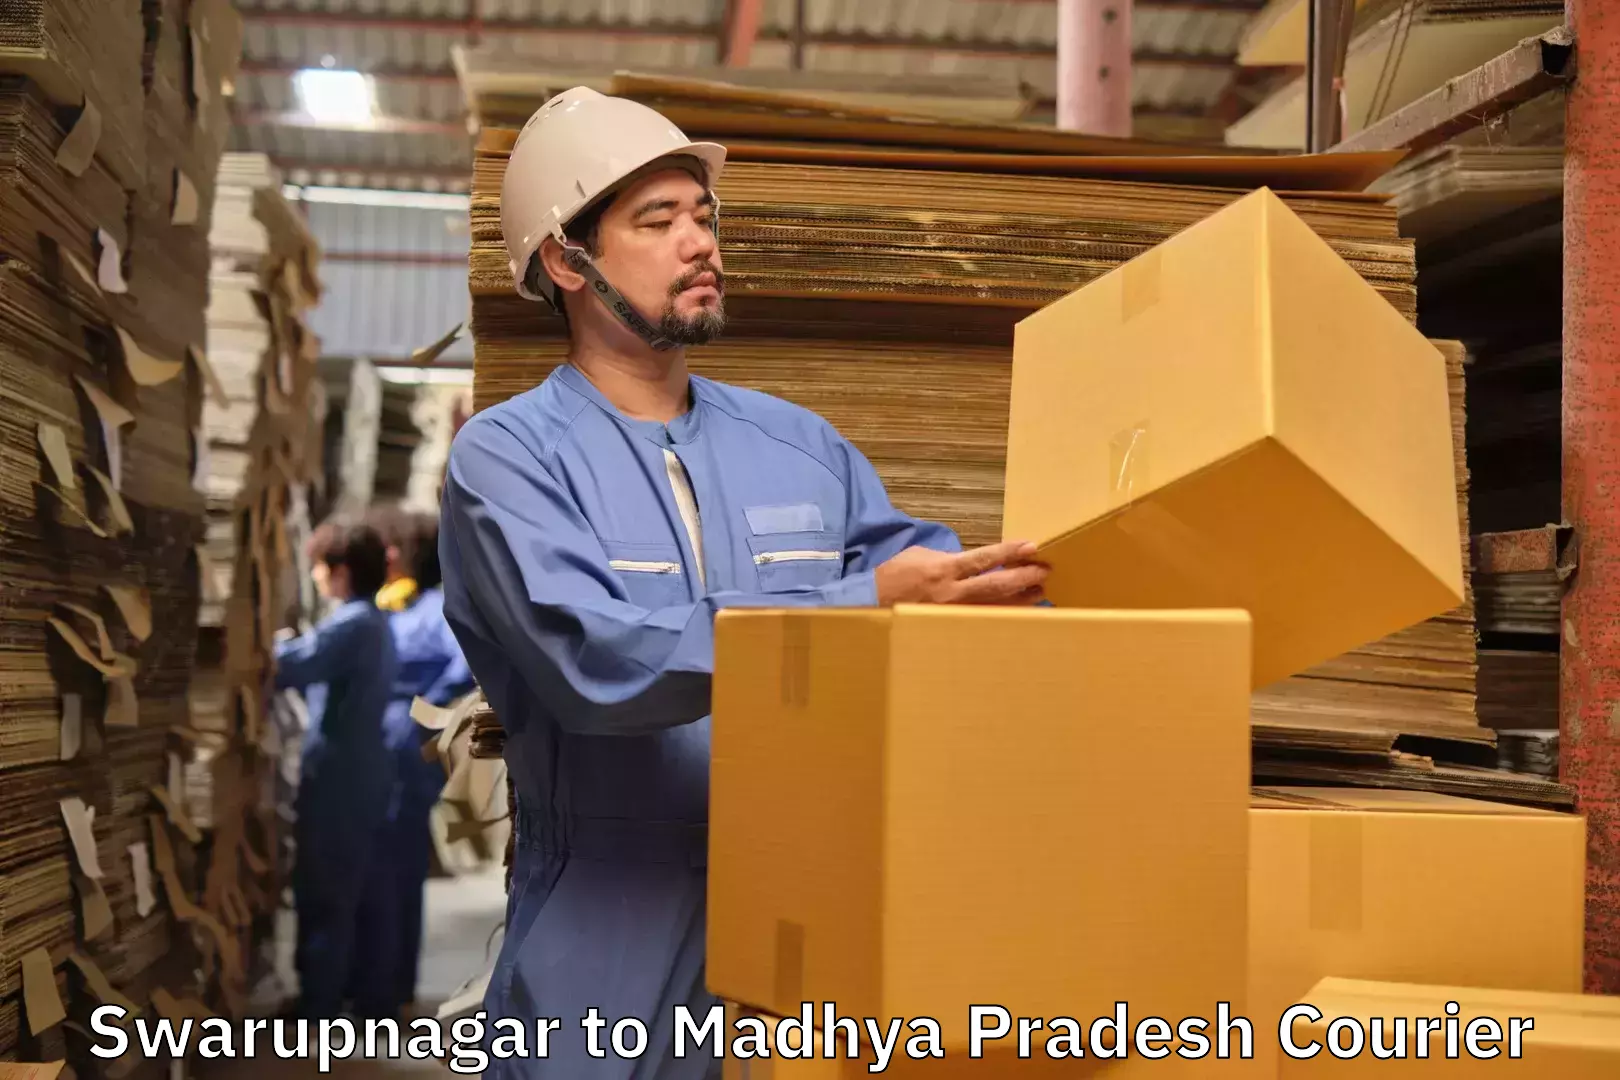 Luggage shipment processing Swarupnagar to Garh Rewa